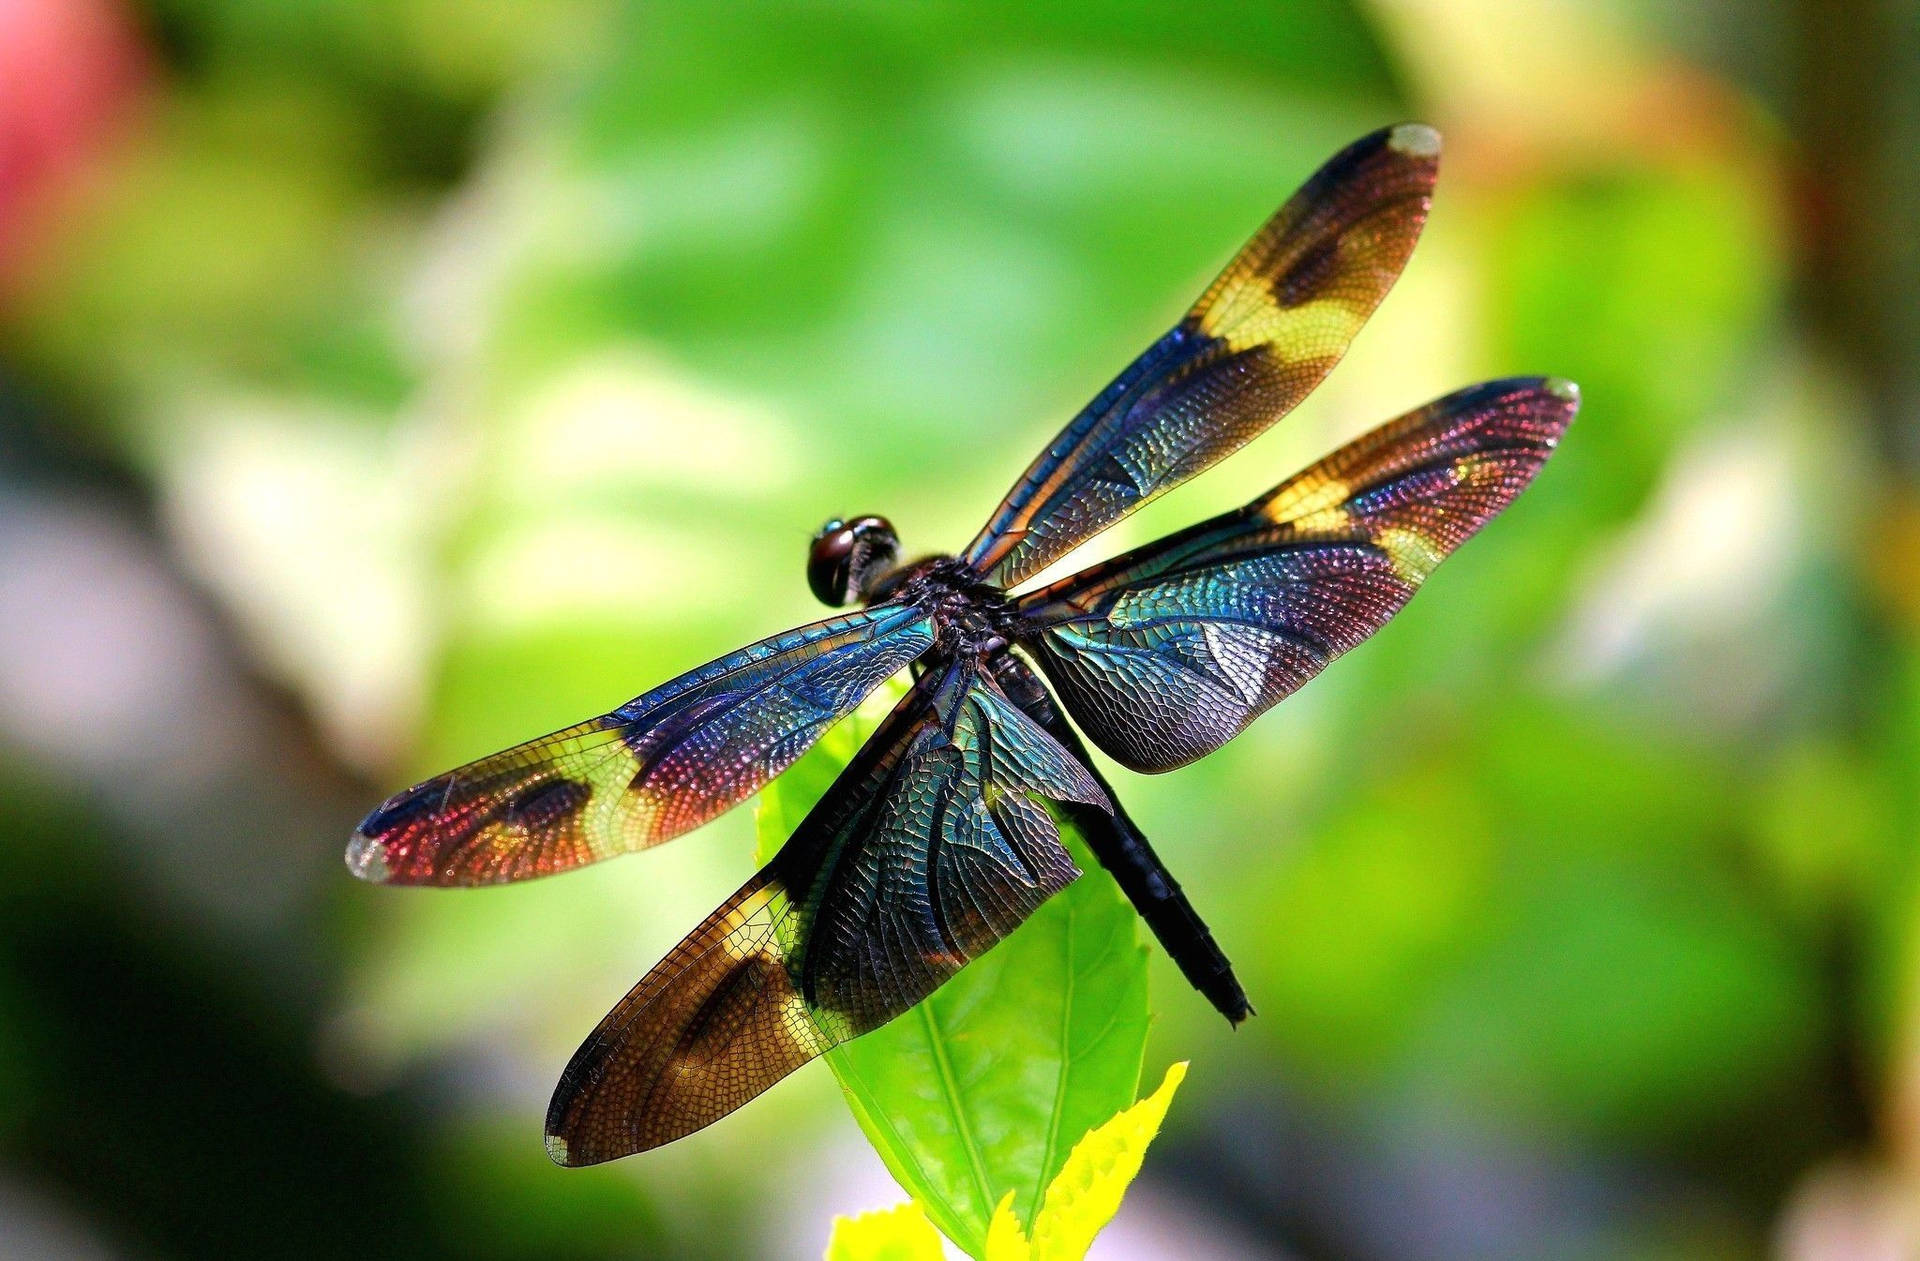 Iridescent Metallic Dragonfly